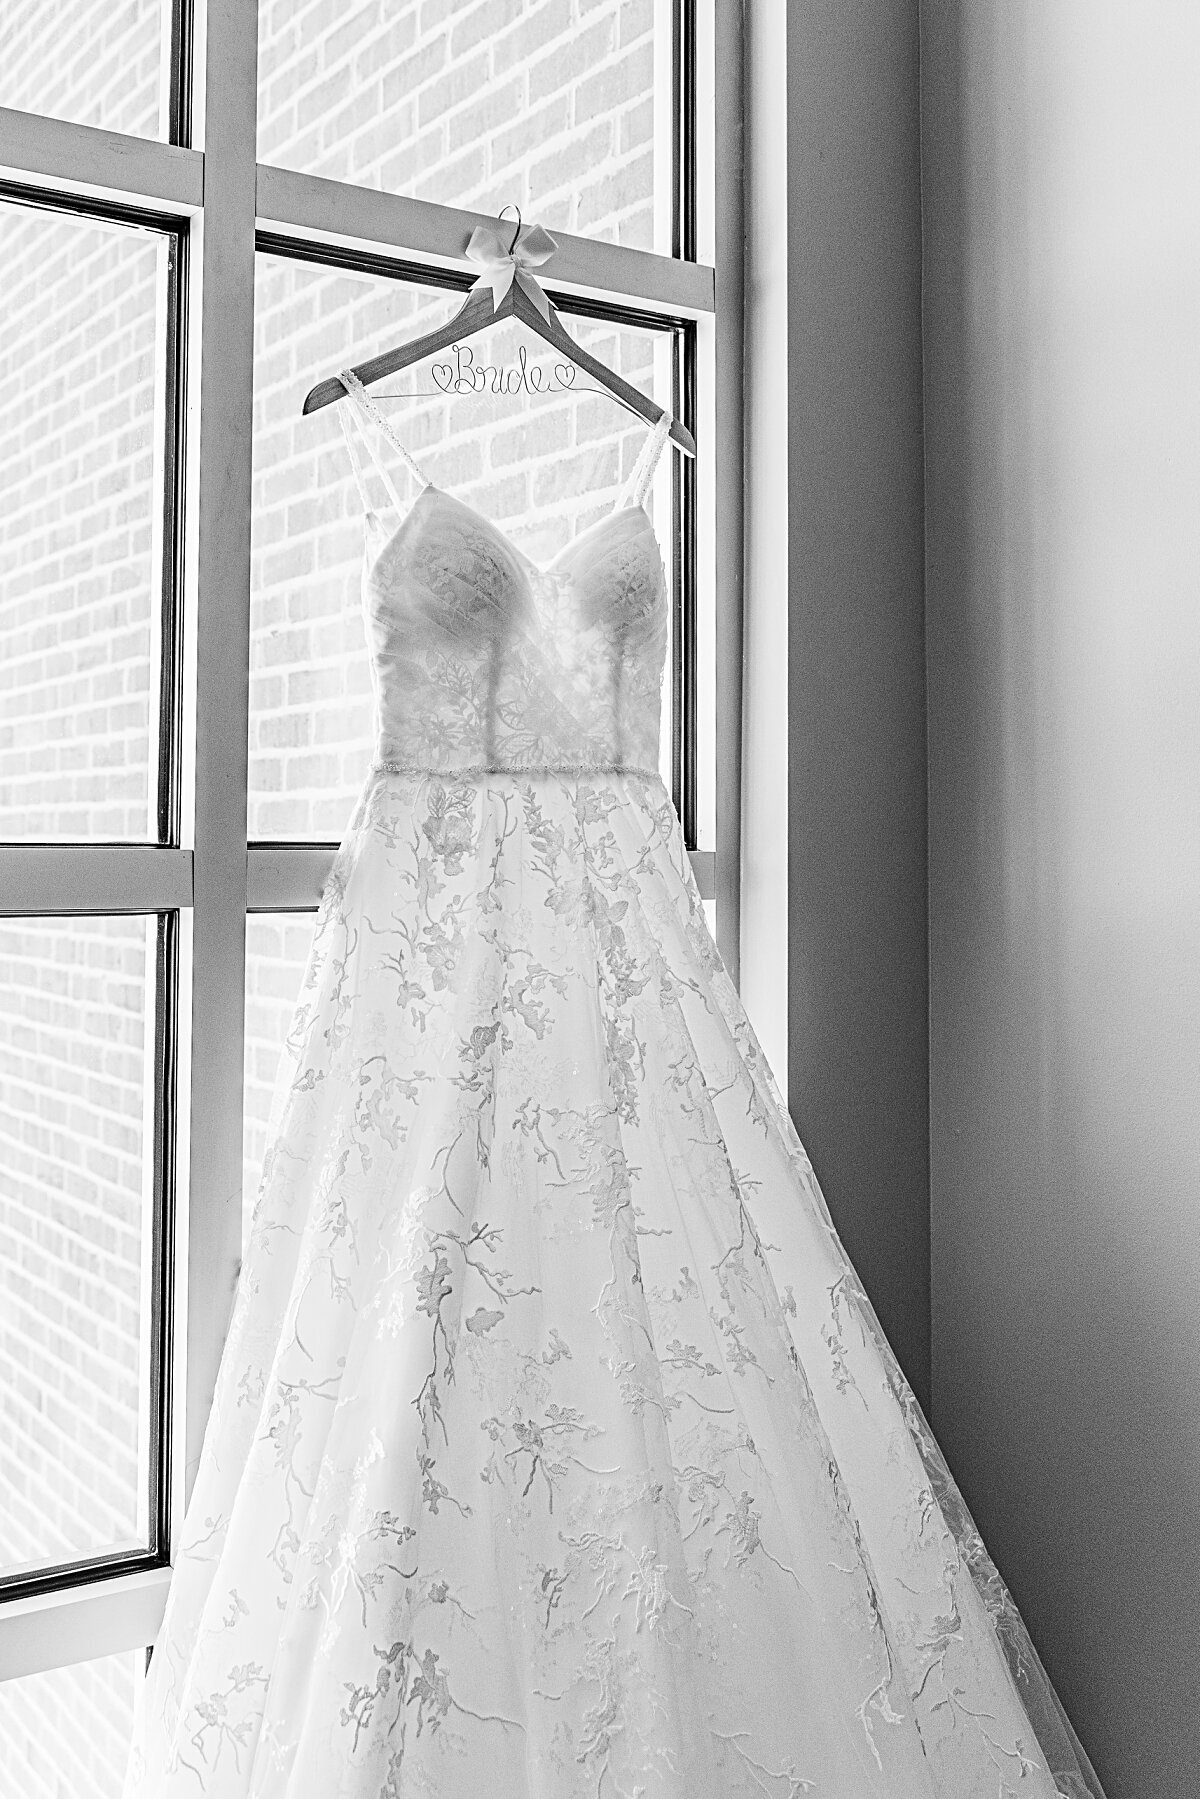 wedding-dress-hanging-from-windowframe